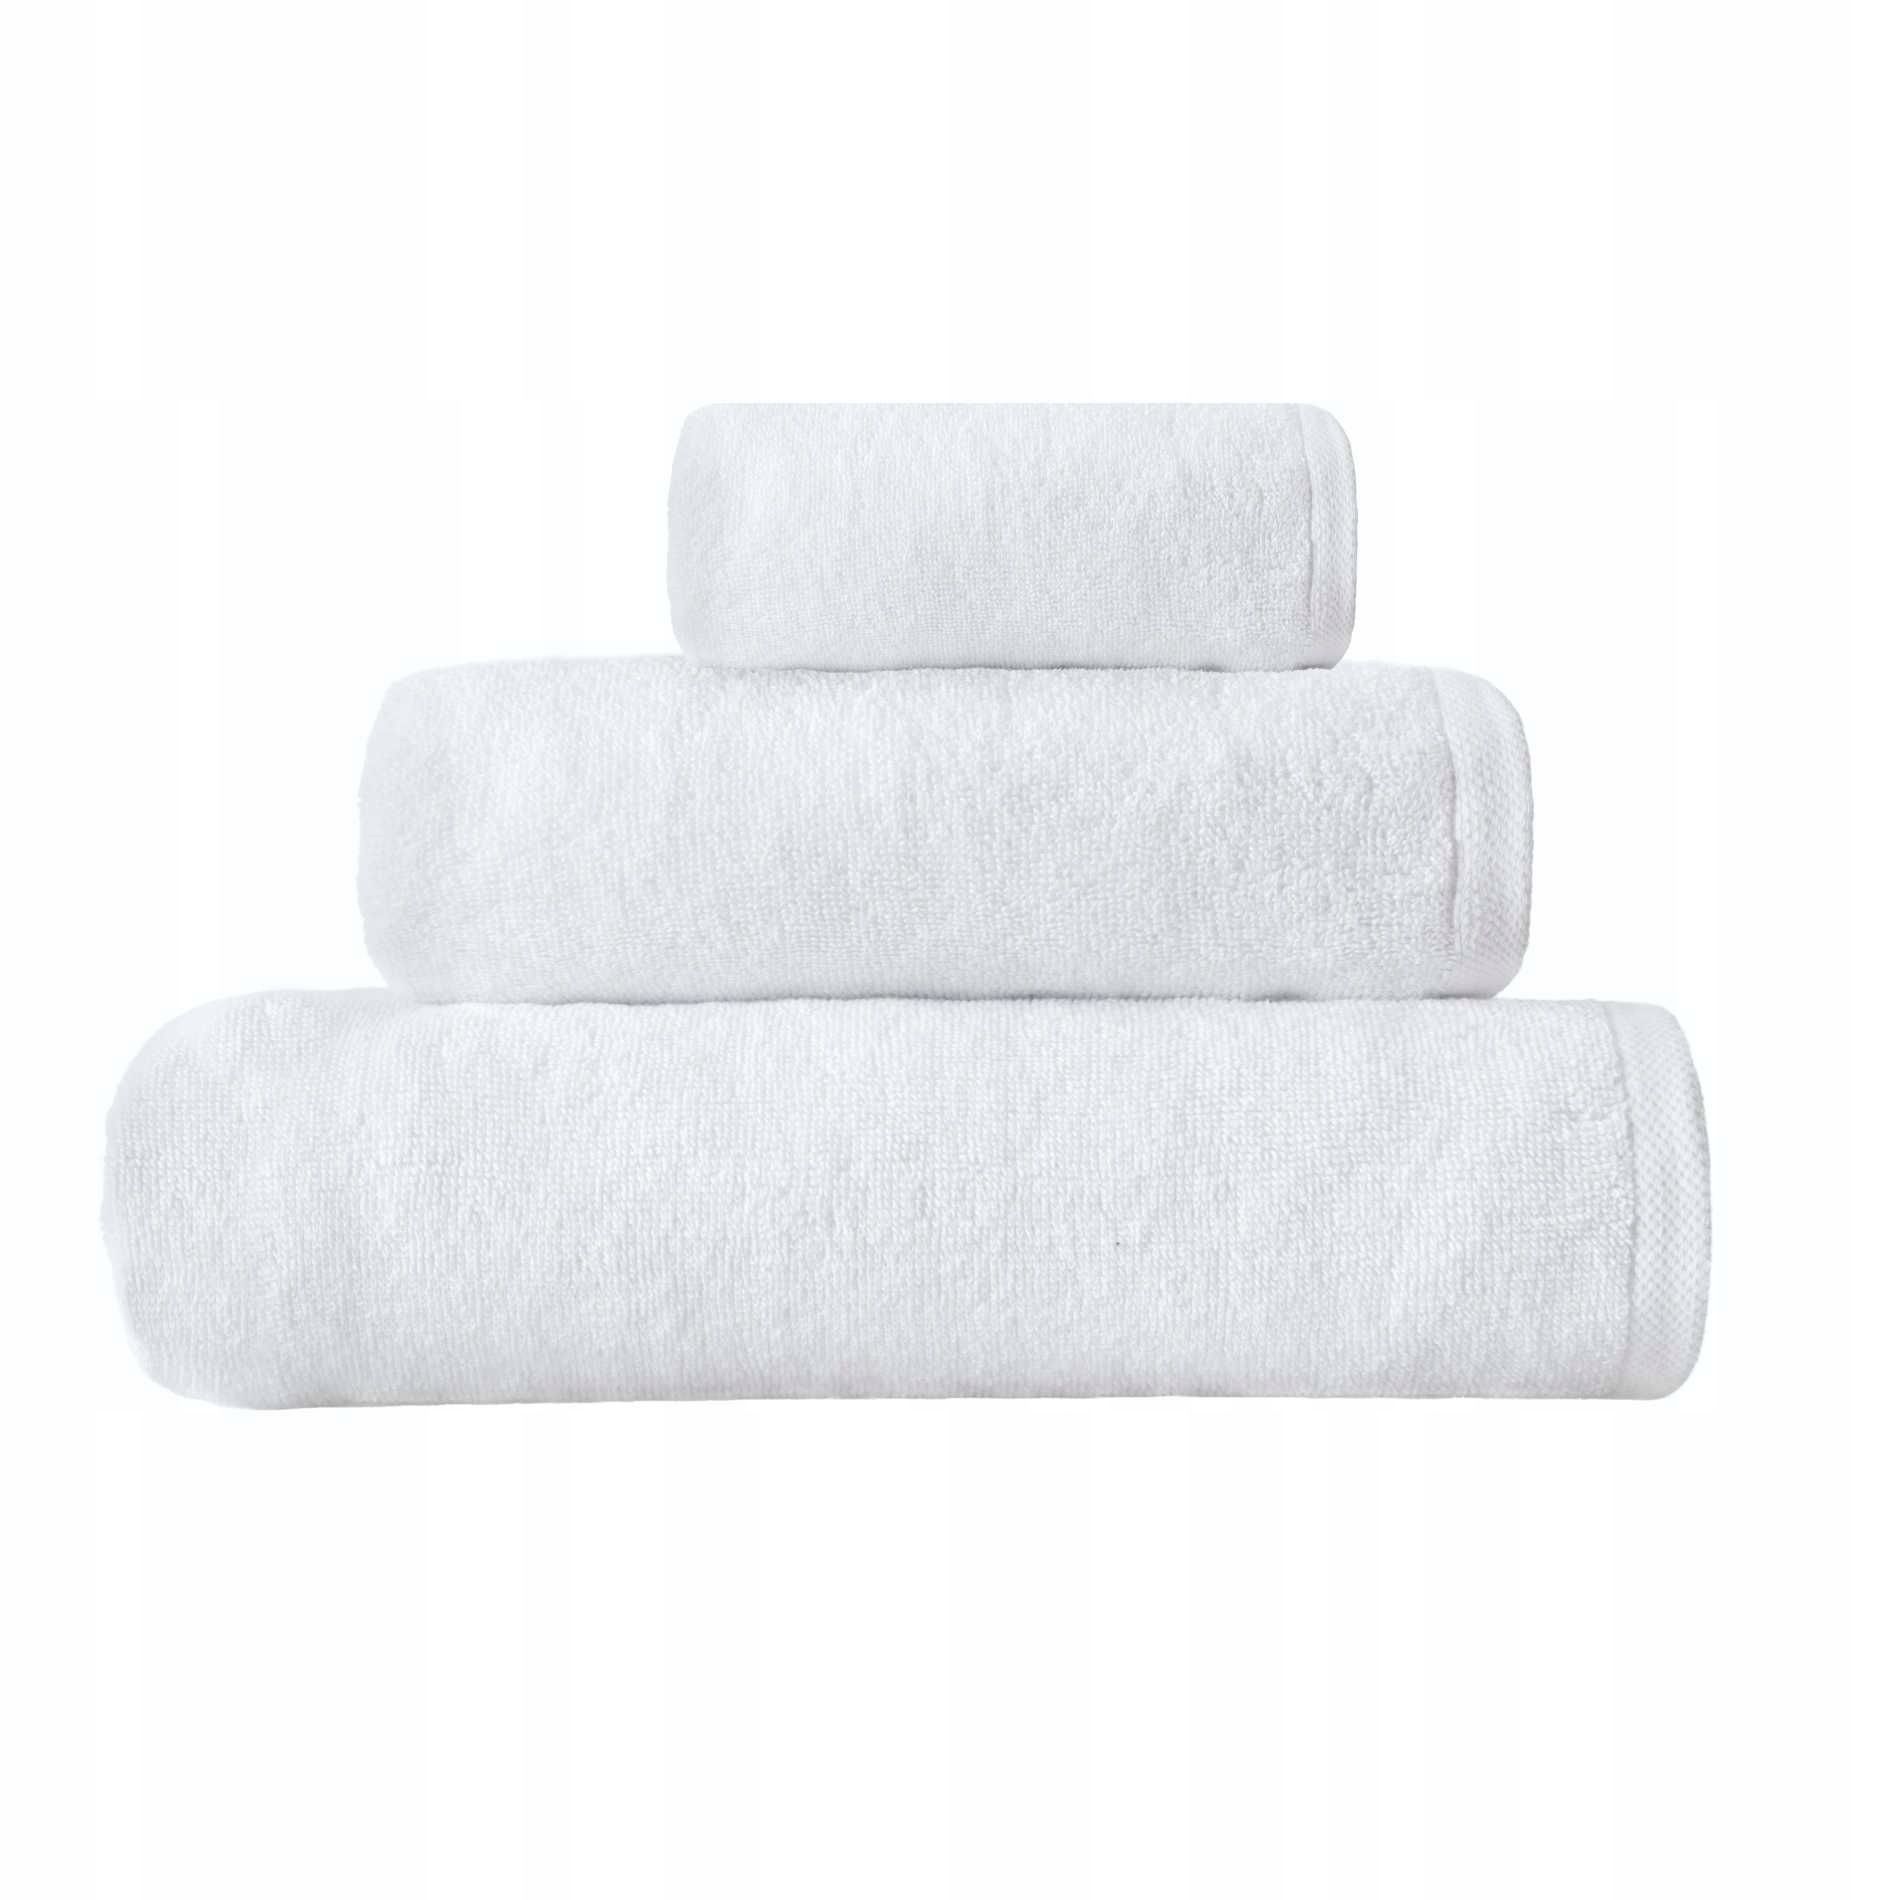 Ręcznik Hotelowy Opal 50x100cm 450g/m2 frotte